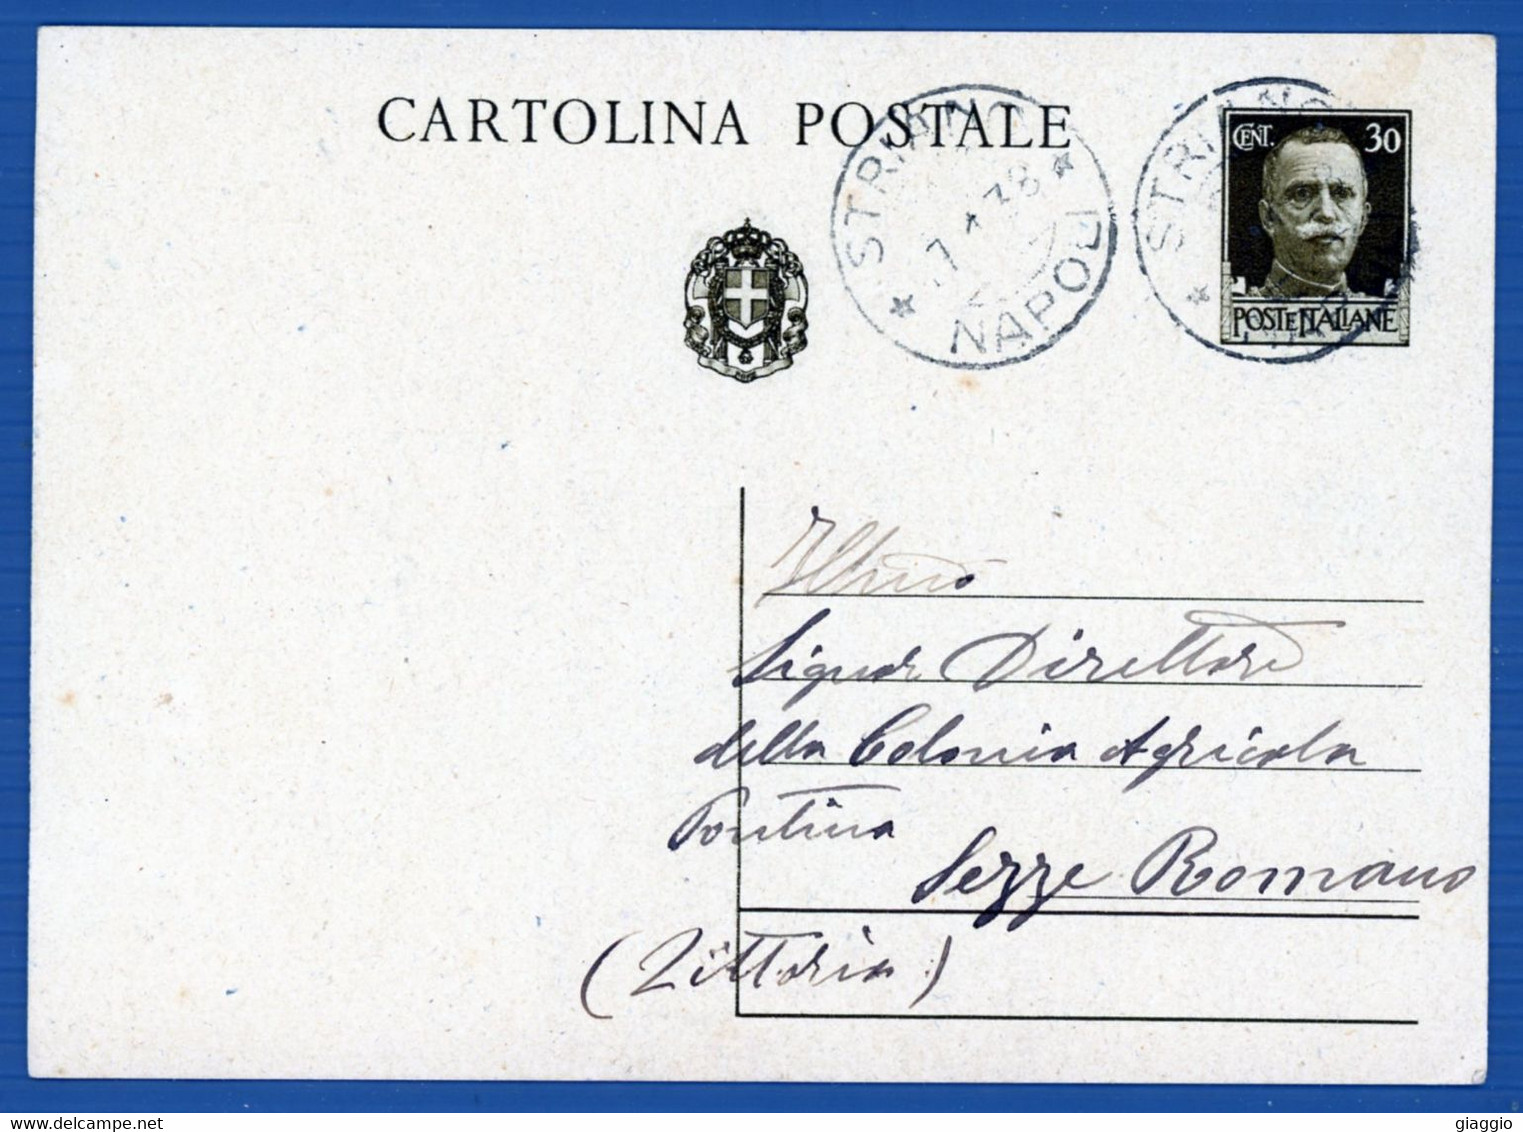 °°° Francobolli N. 4351 - Cartolina Postale Viaggiata °°° - Stamped Stationery